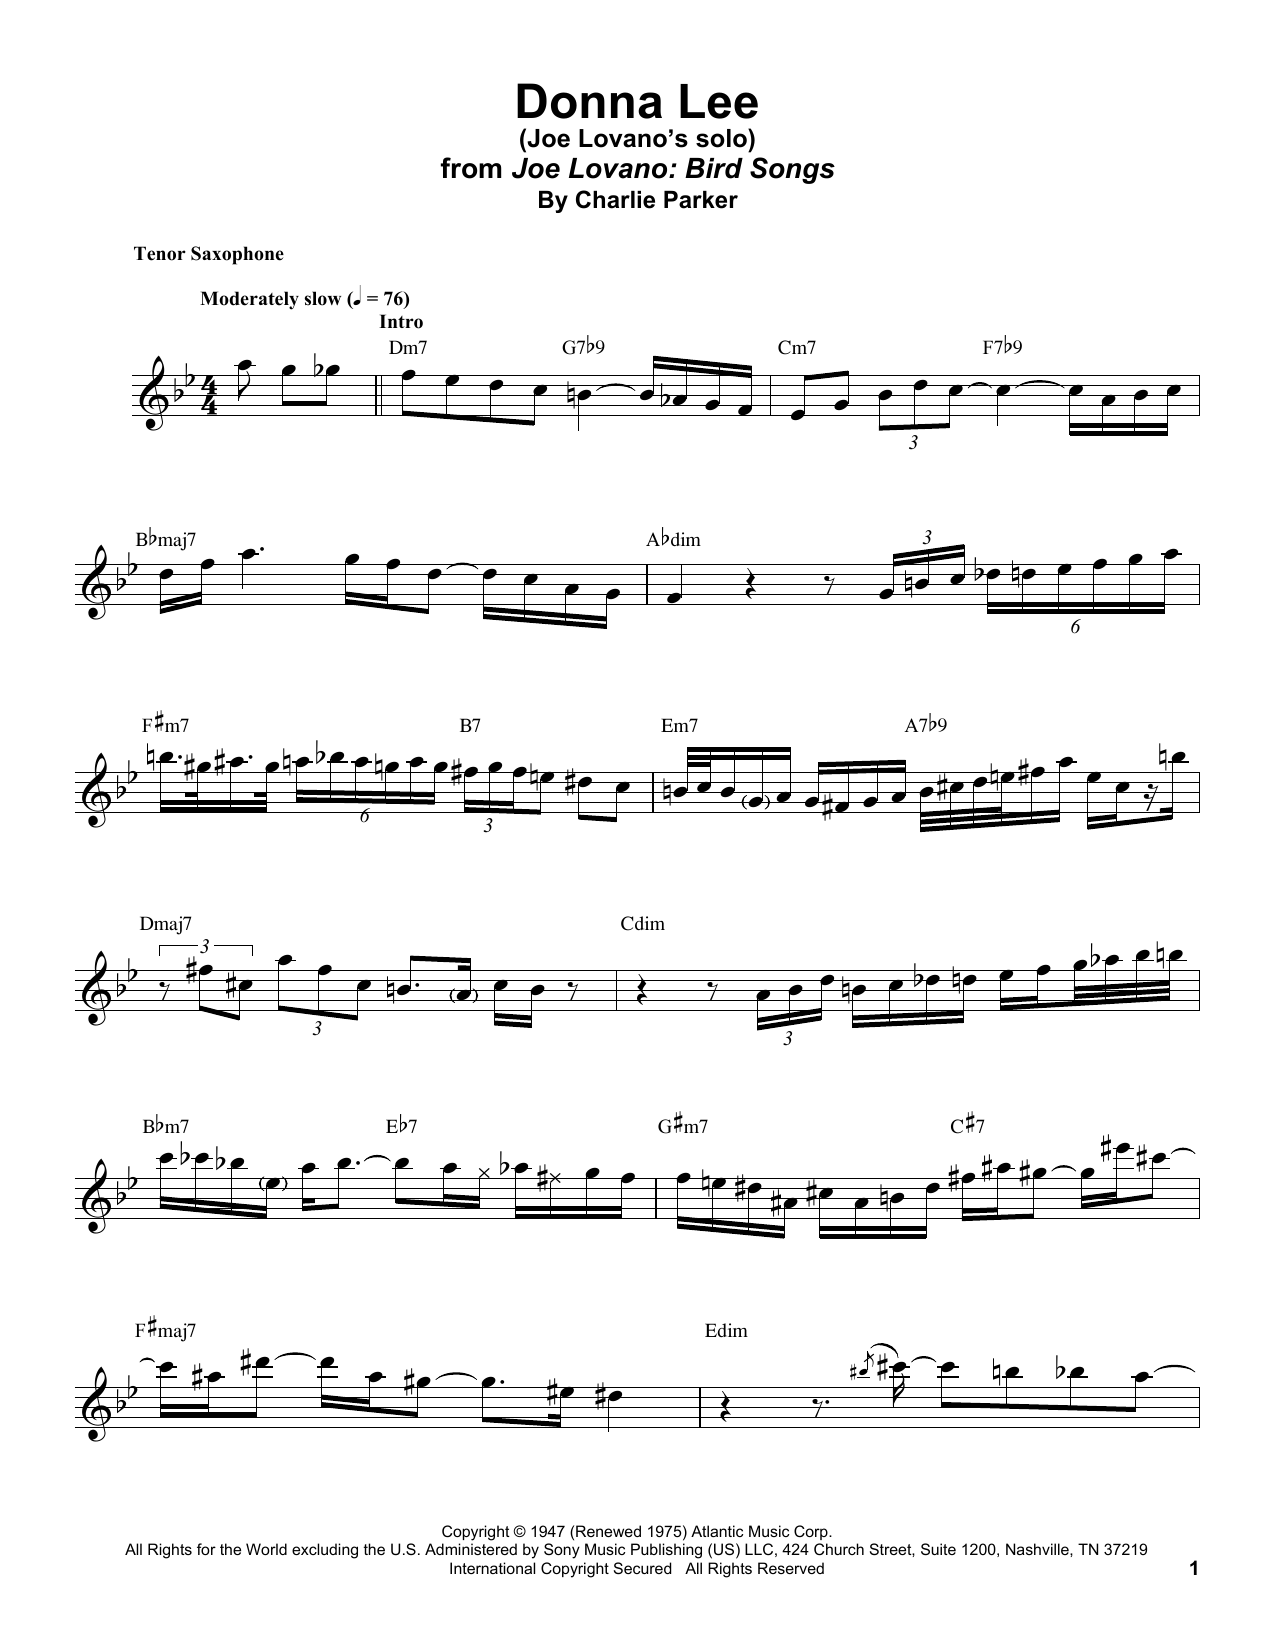 Joe Lovano Donna Lee Sheet Music Notes & Chords for Tenor Sax Transcription - Download or Print PDF